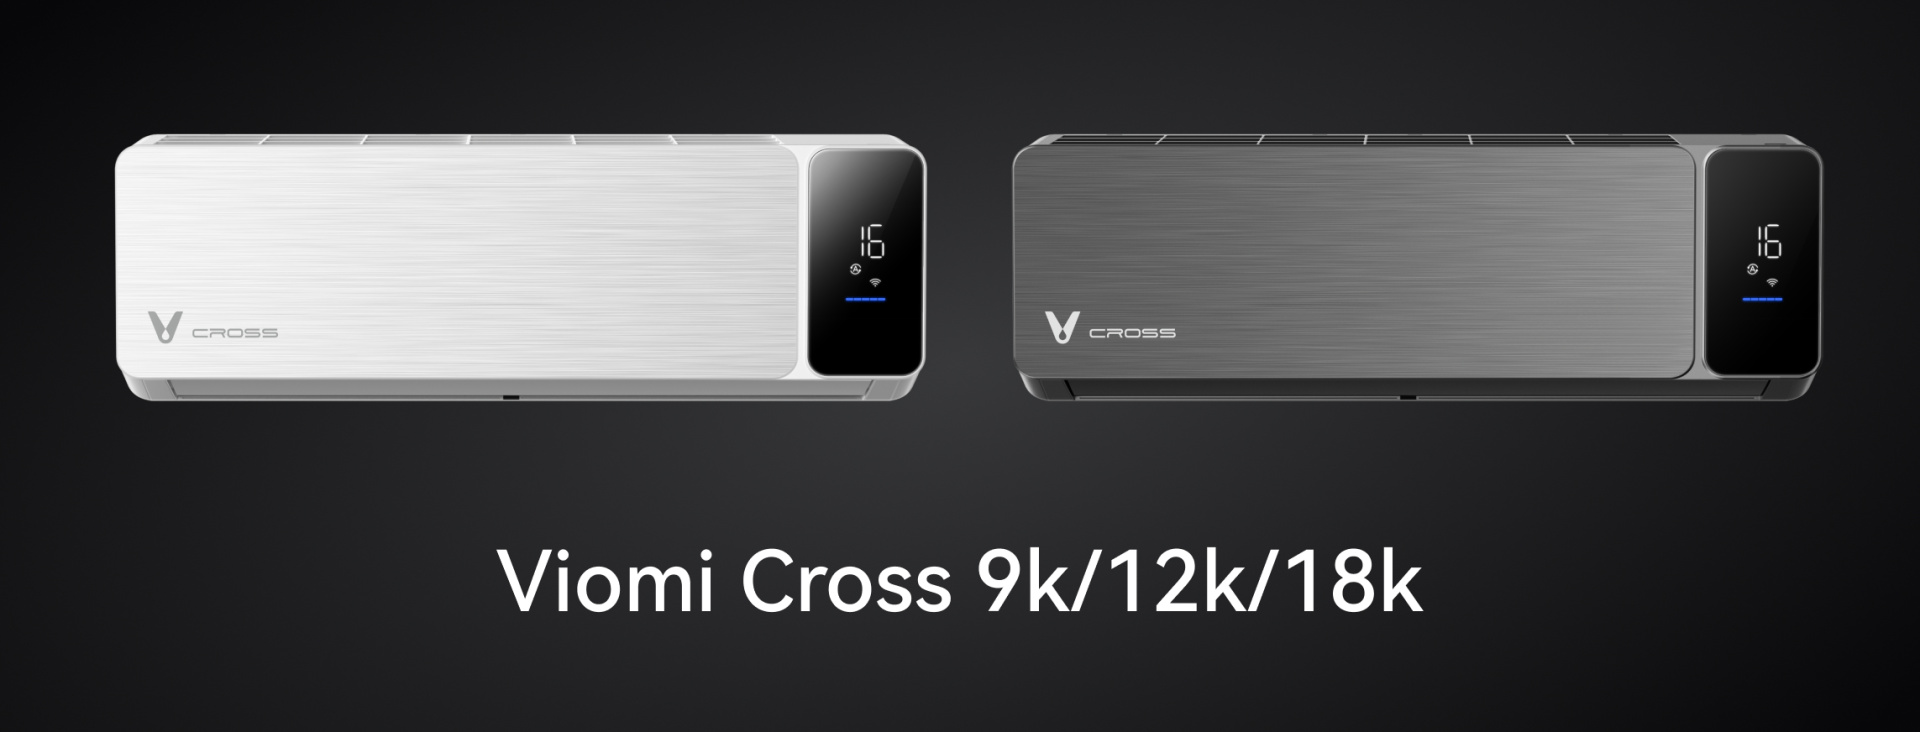 Viomi_Cross_Overview_20.jpg